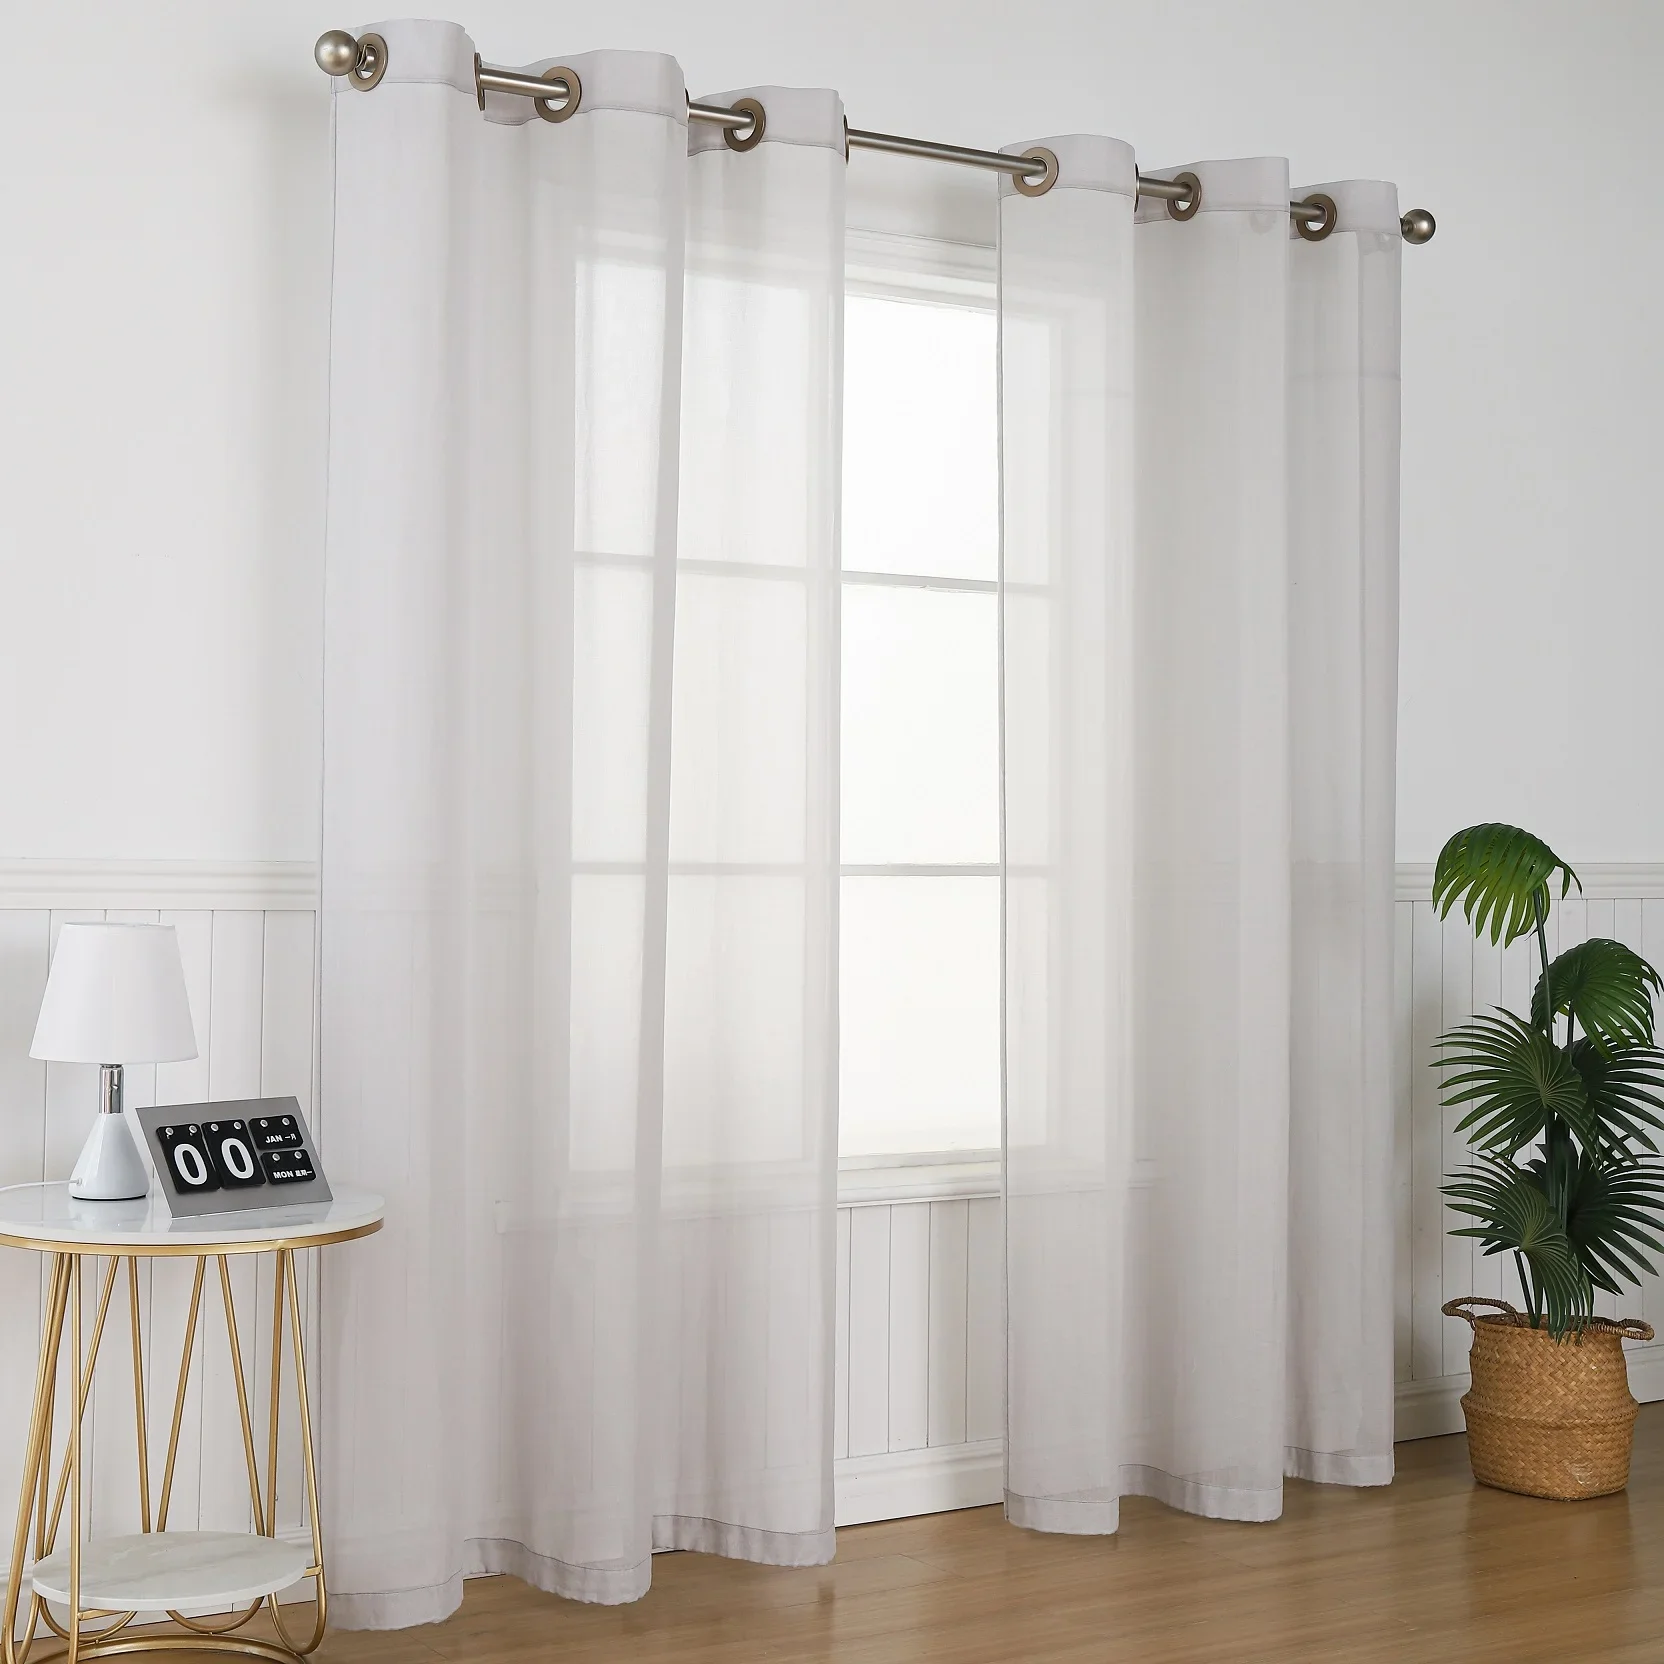 

Urgarding Anti-radiation Emf Shielding Cotton & Silver Mesh Curtains for Window, White Anti Radiation Window Curtain